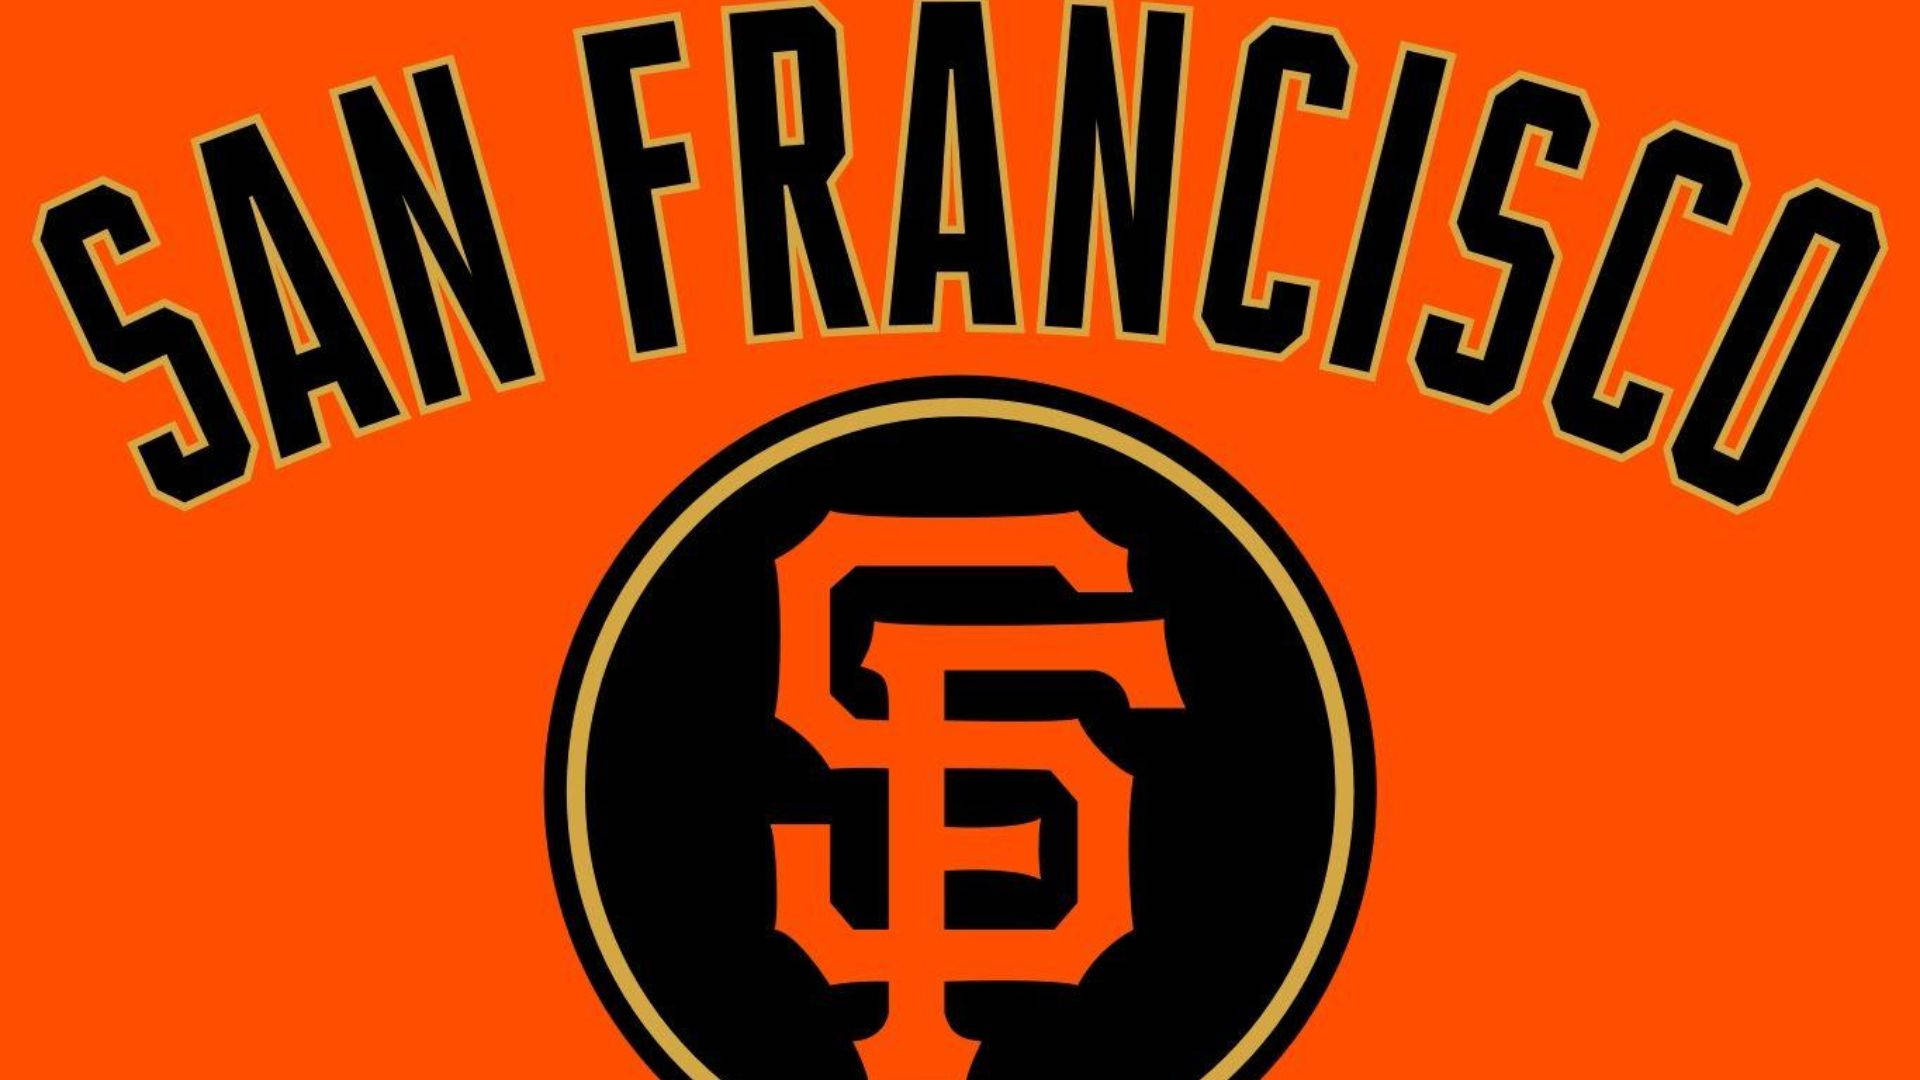 San Francisco Giants On Orange Backdrop Wallpaper